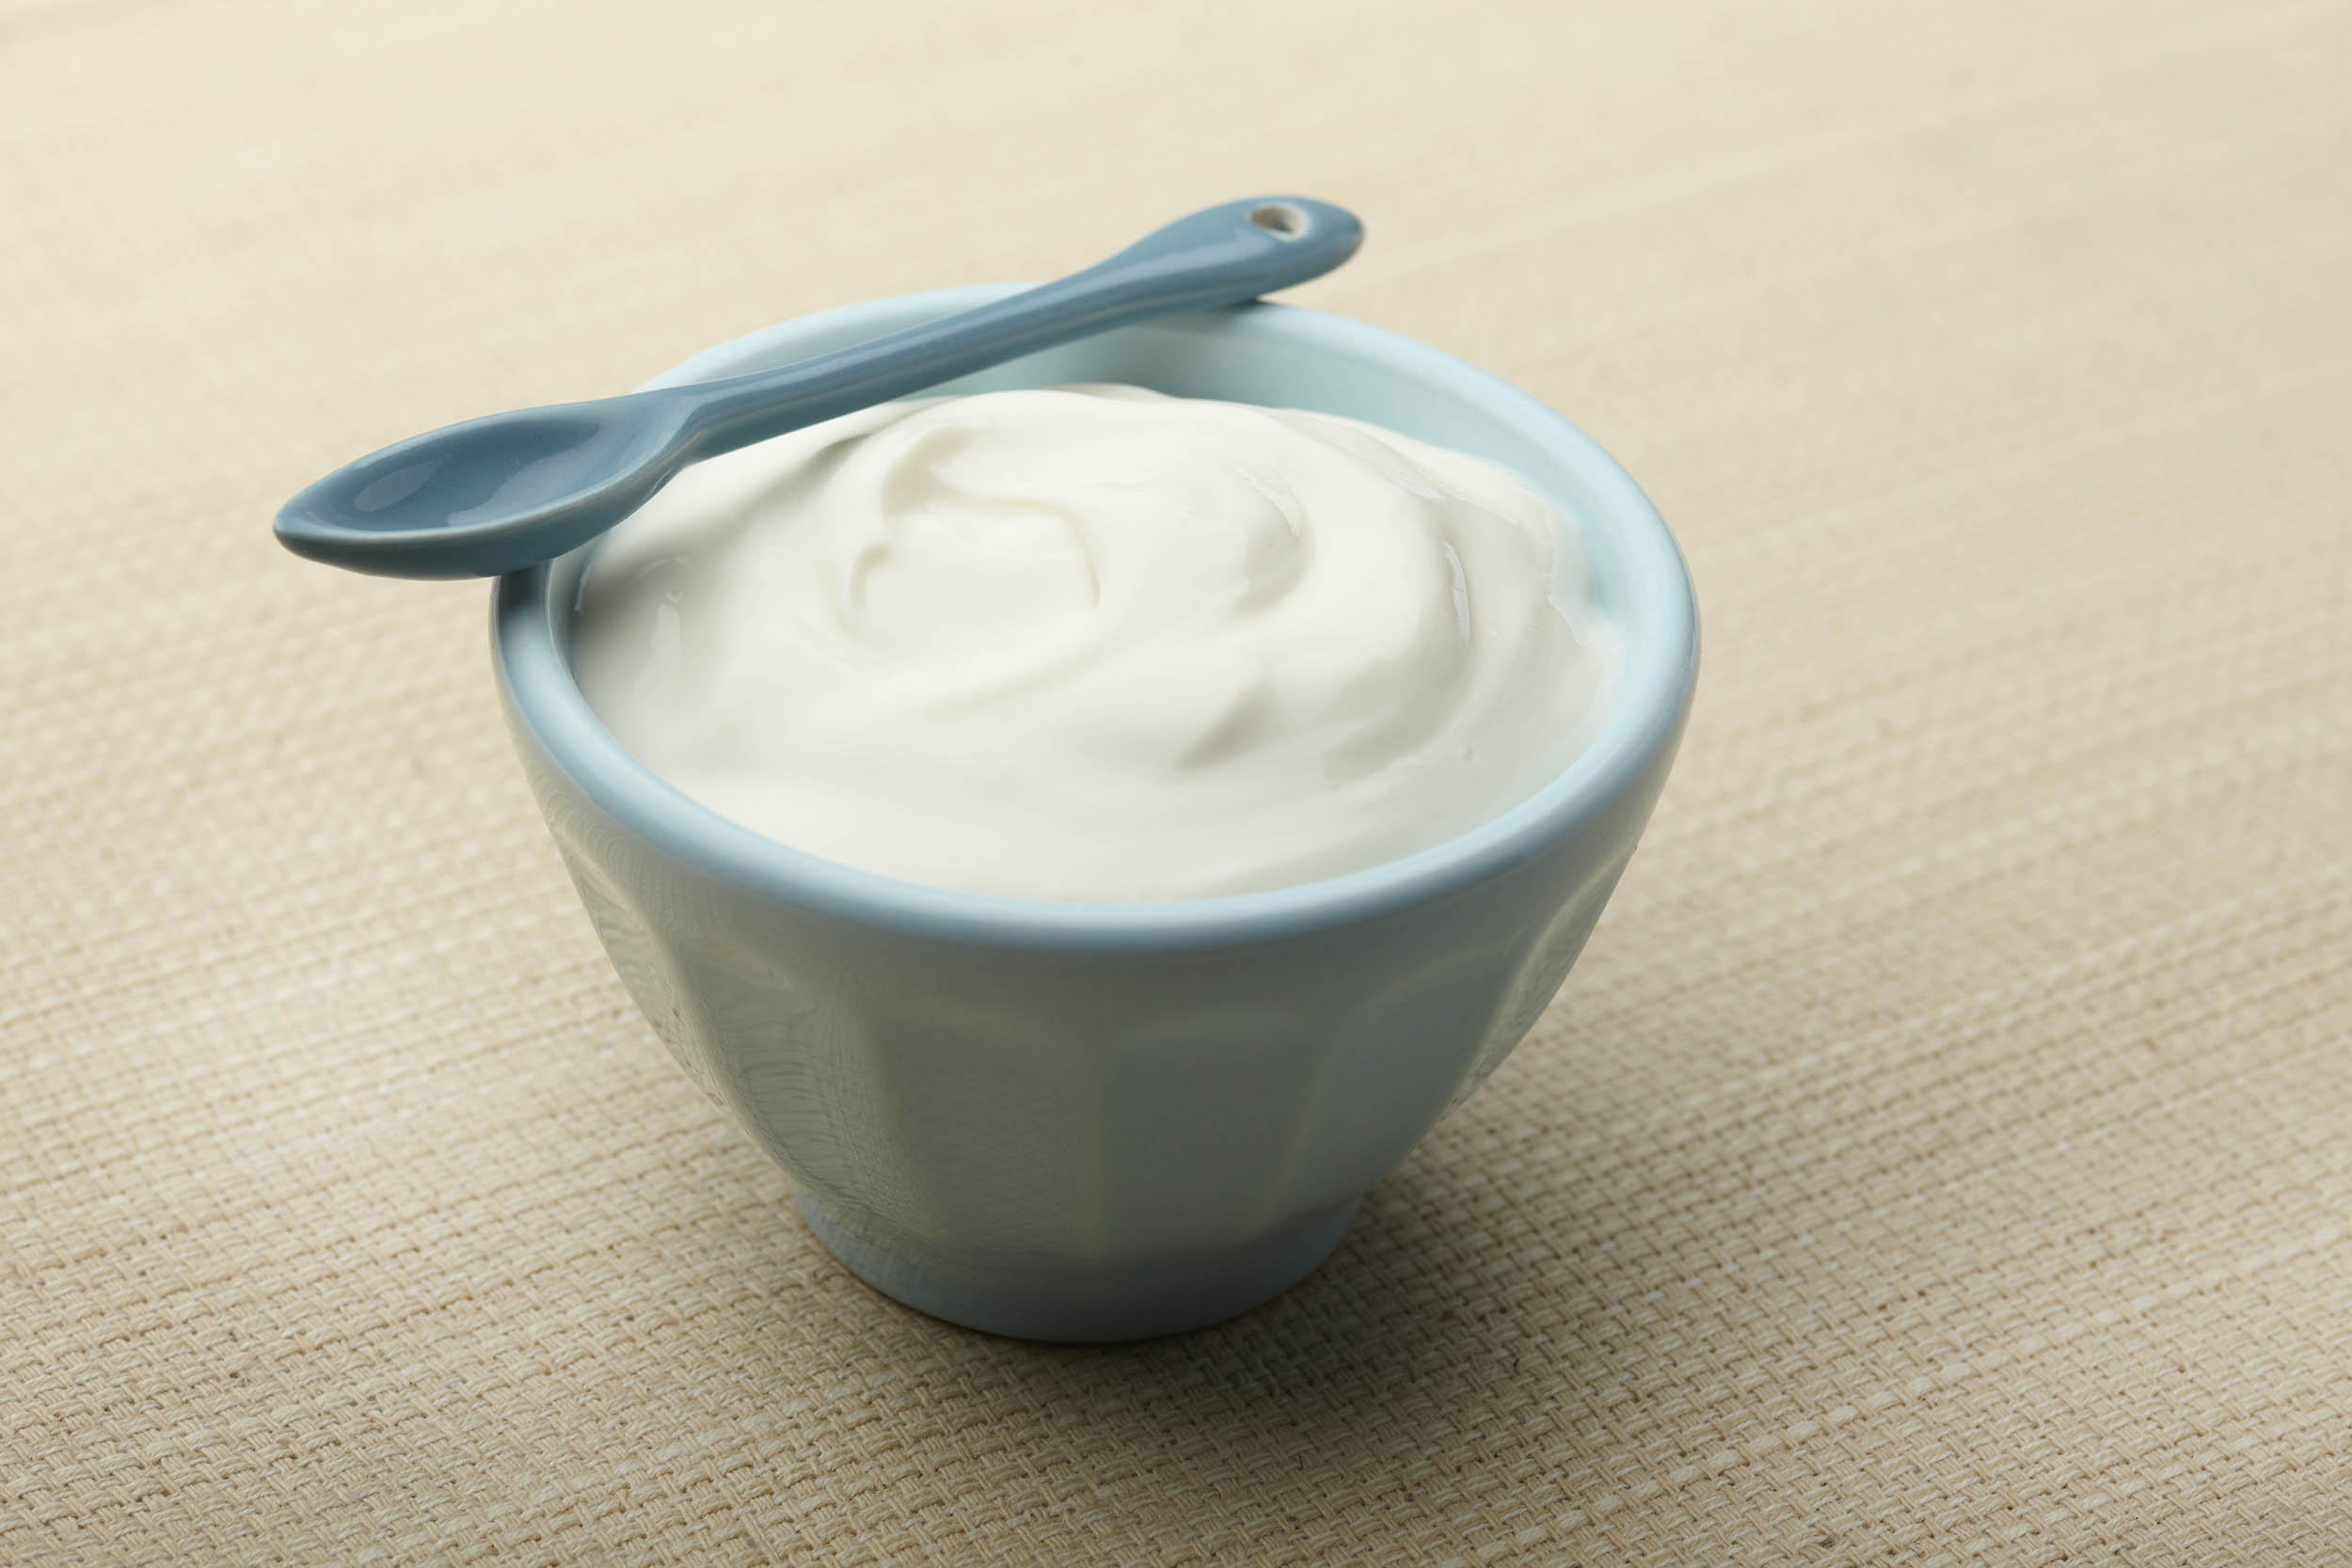 Greek yogurt nutrition: High-protein, low-carb, probiotic food